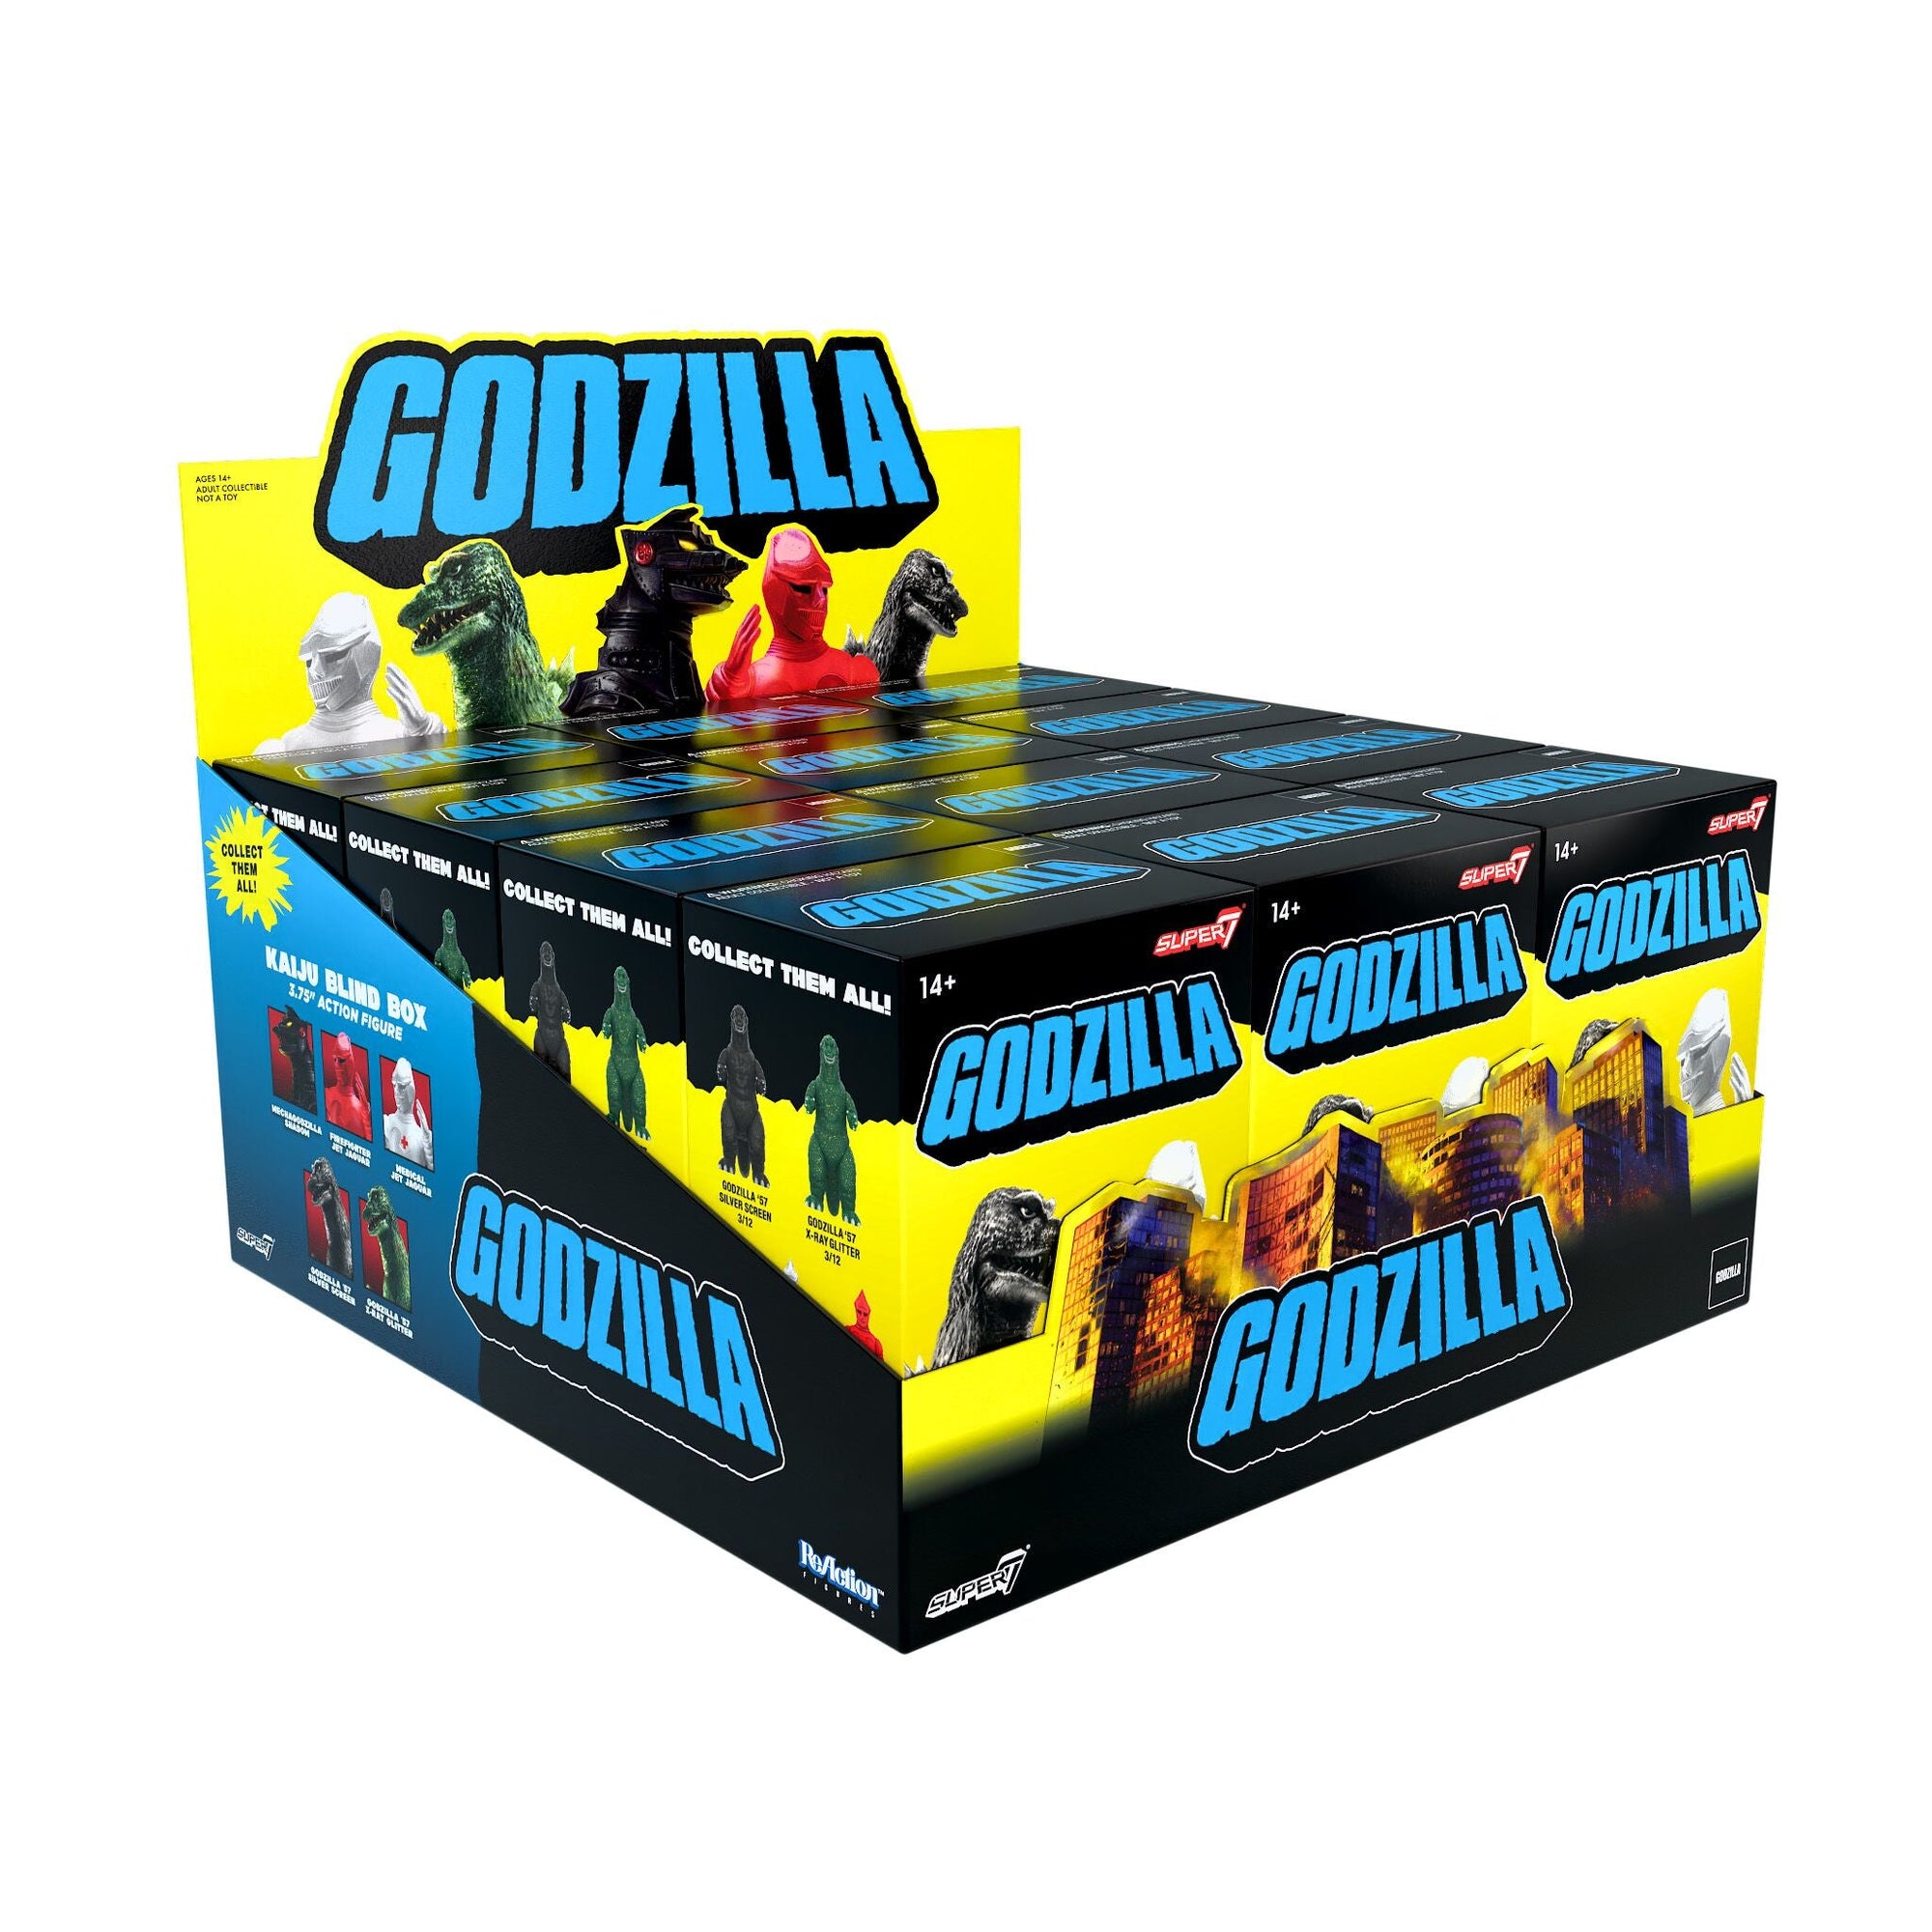 Toho Kaiju Godzilla Warrior Blind Box by Super7 (1 BLIND BOX)